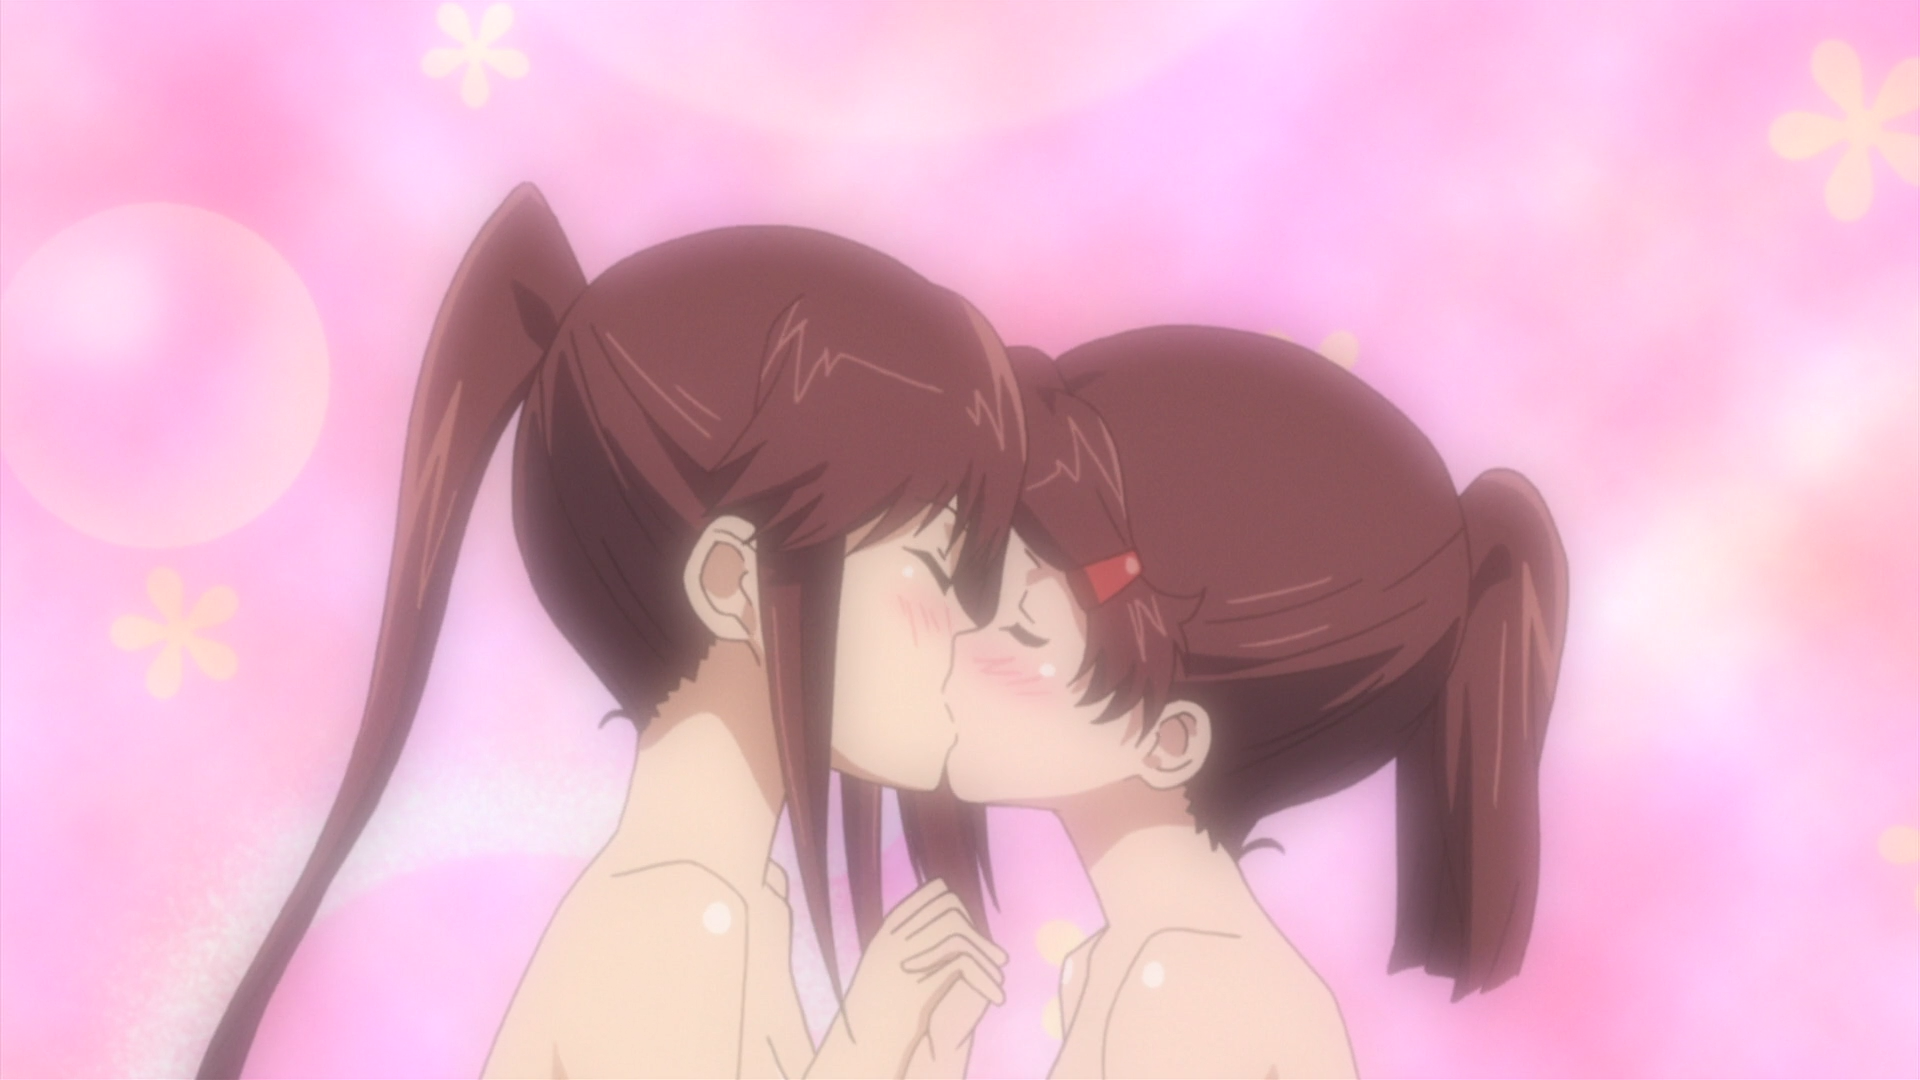 лесби аниме поцелуй сестер фото 5